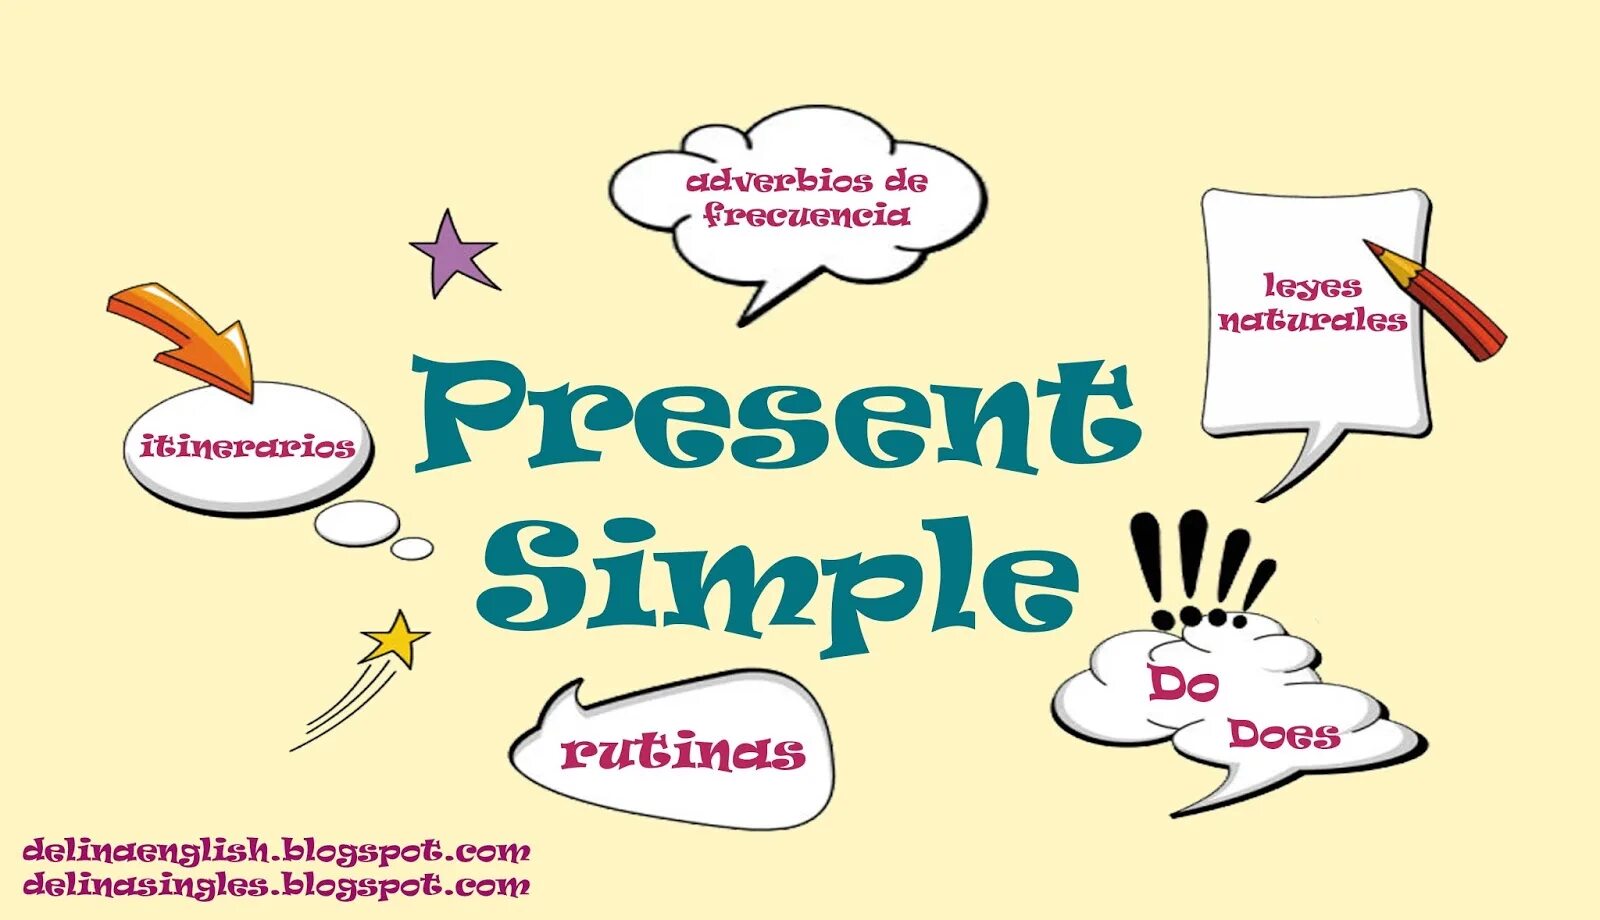 Present simple. Present simple для детей. Презент Симпл картинки. Present simple картинки. Present simple movie